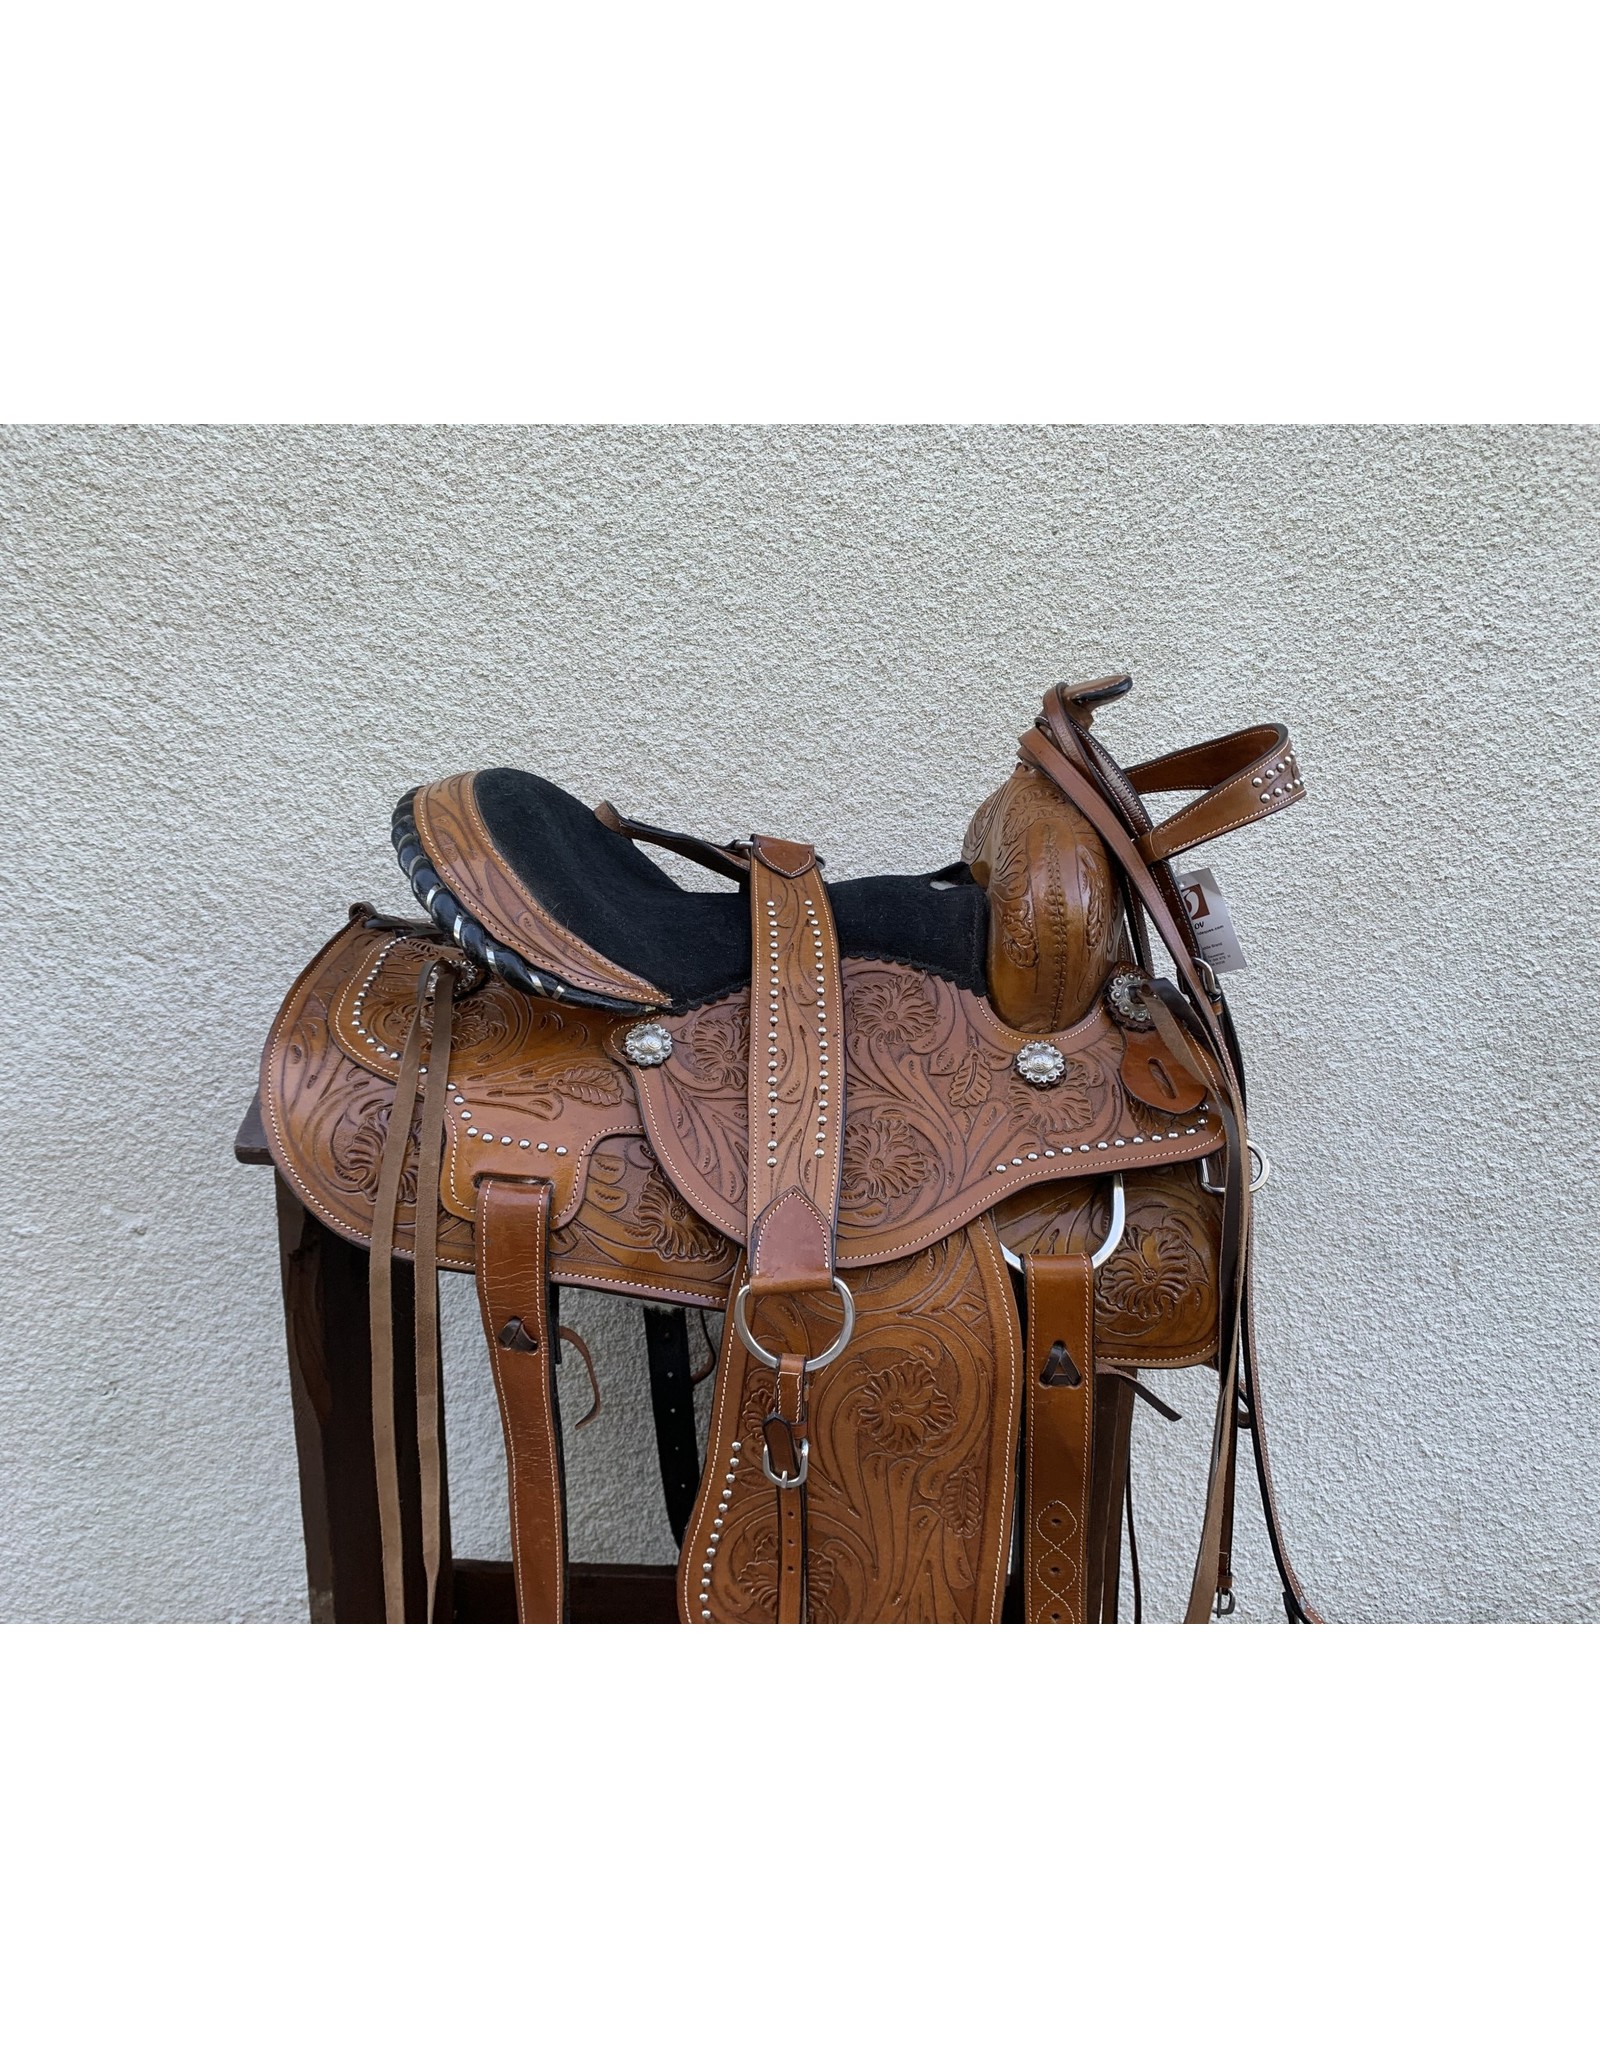 New Dreamworld Western Saddle 15" Full Quarter Horse Bars Seat Comes w/ Breastcollar, Reins & Headstall